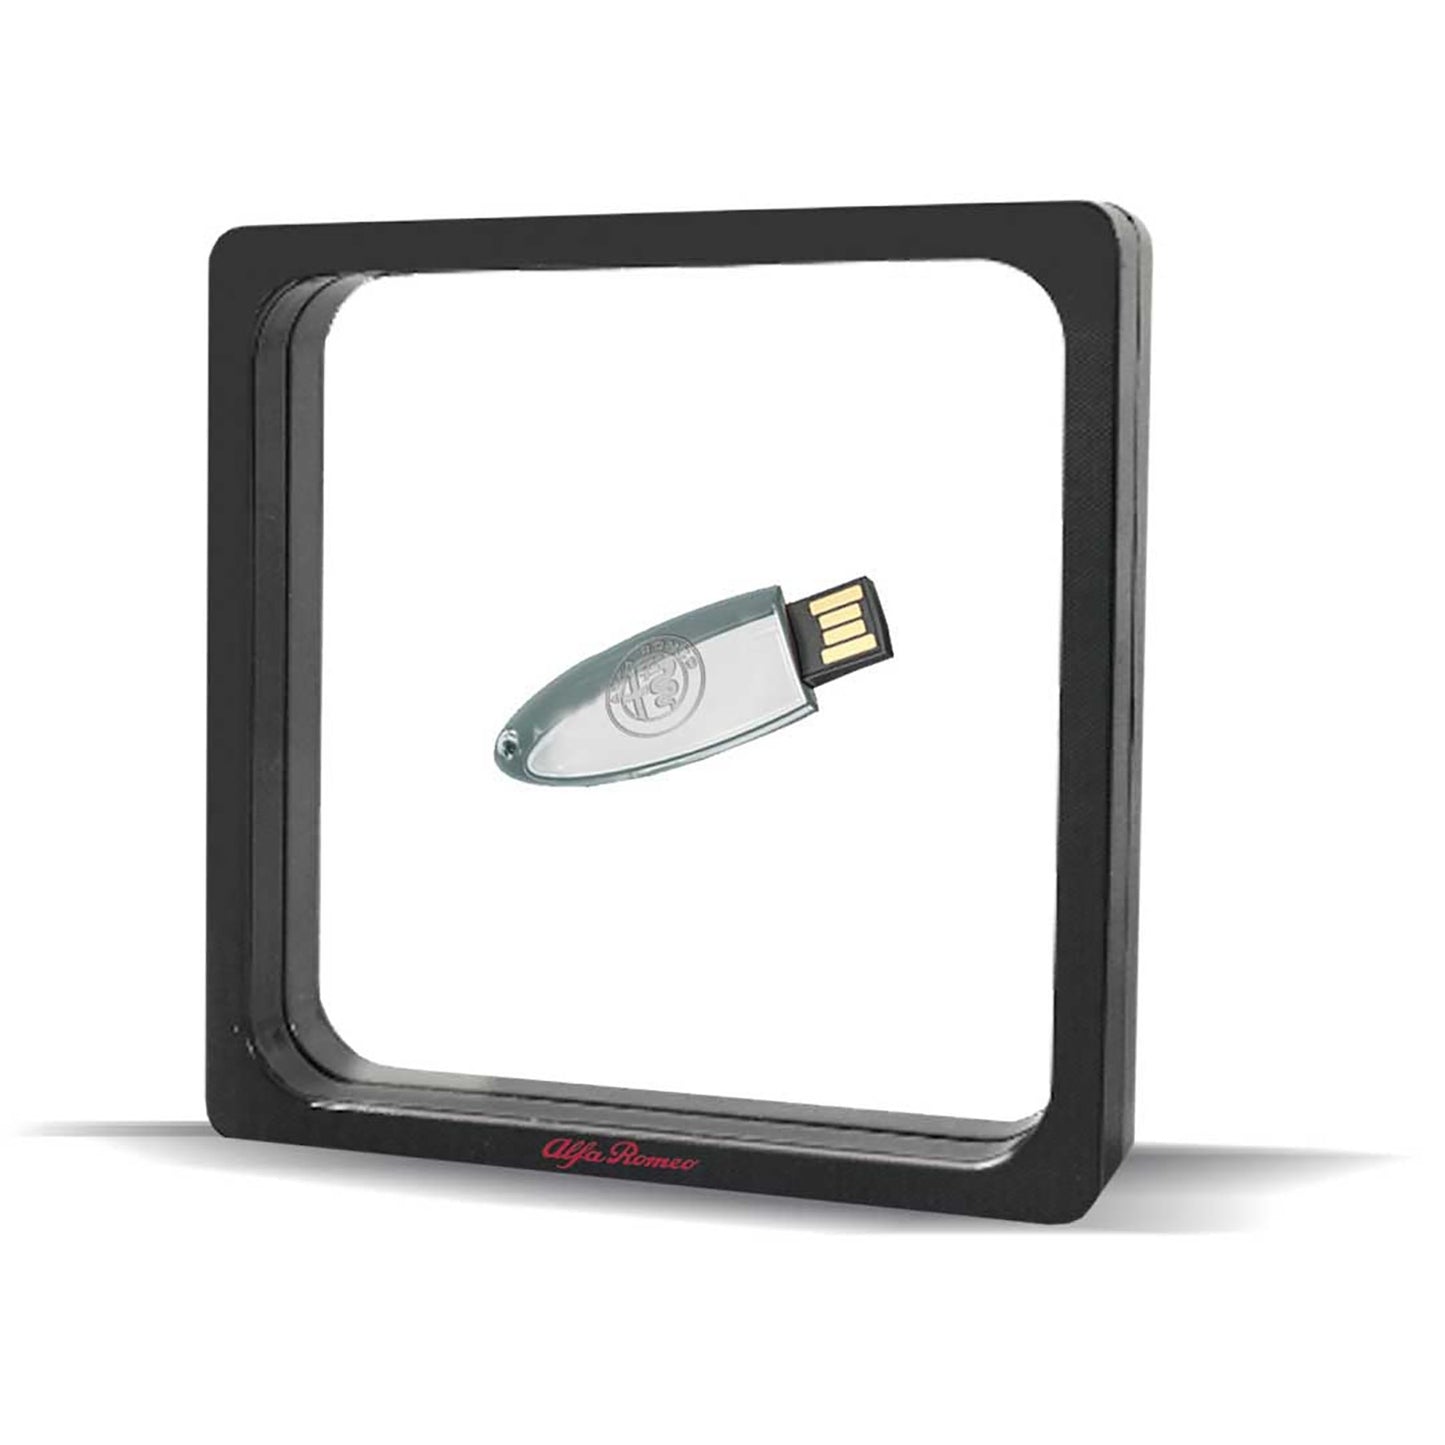 USB Storage Device - 16GB Alfa Romeo